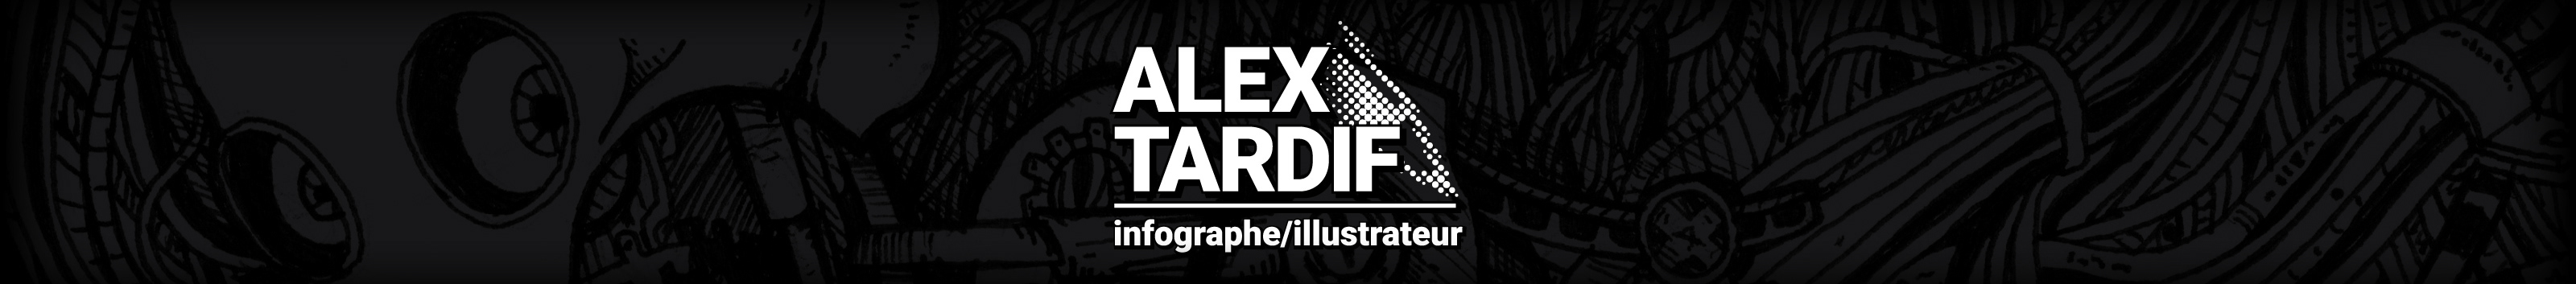 Alex Tardif's profile banner